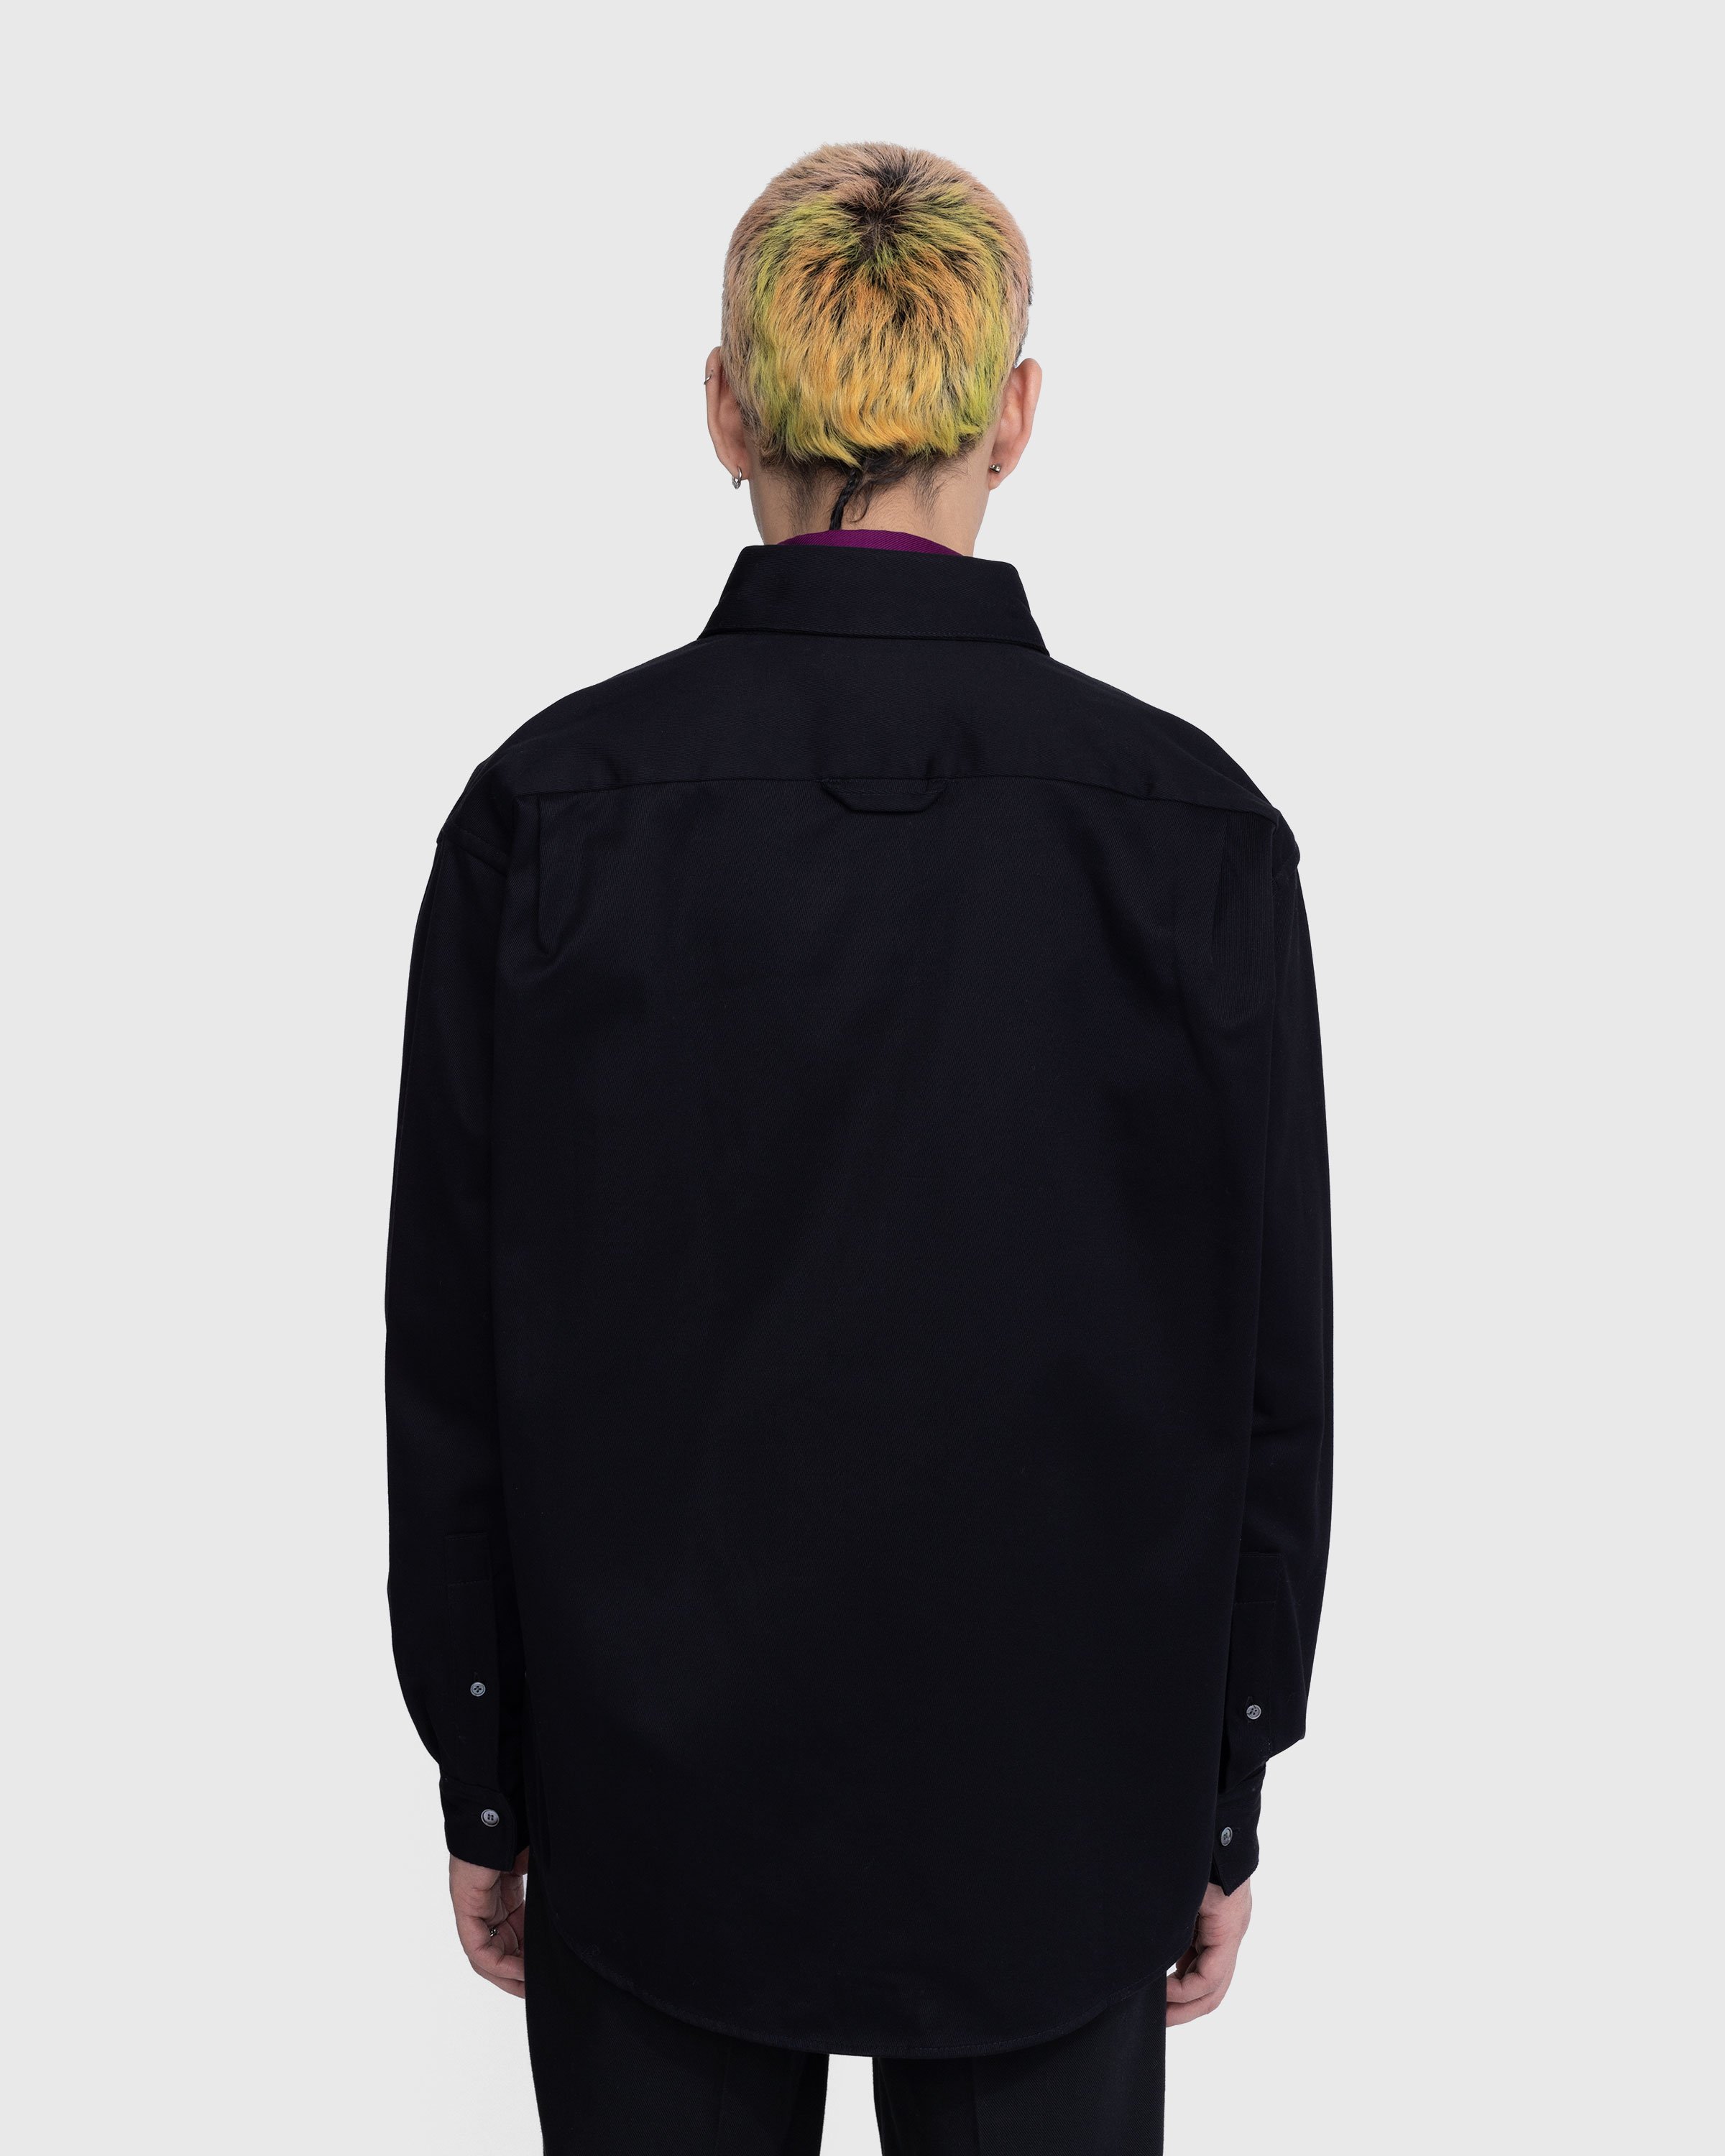 Acne Studios - Button-Up Overshirt Black - Clothing - Black - Image 3